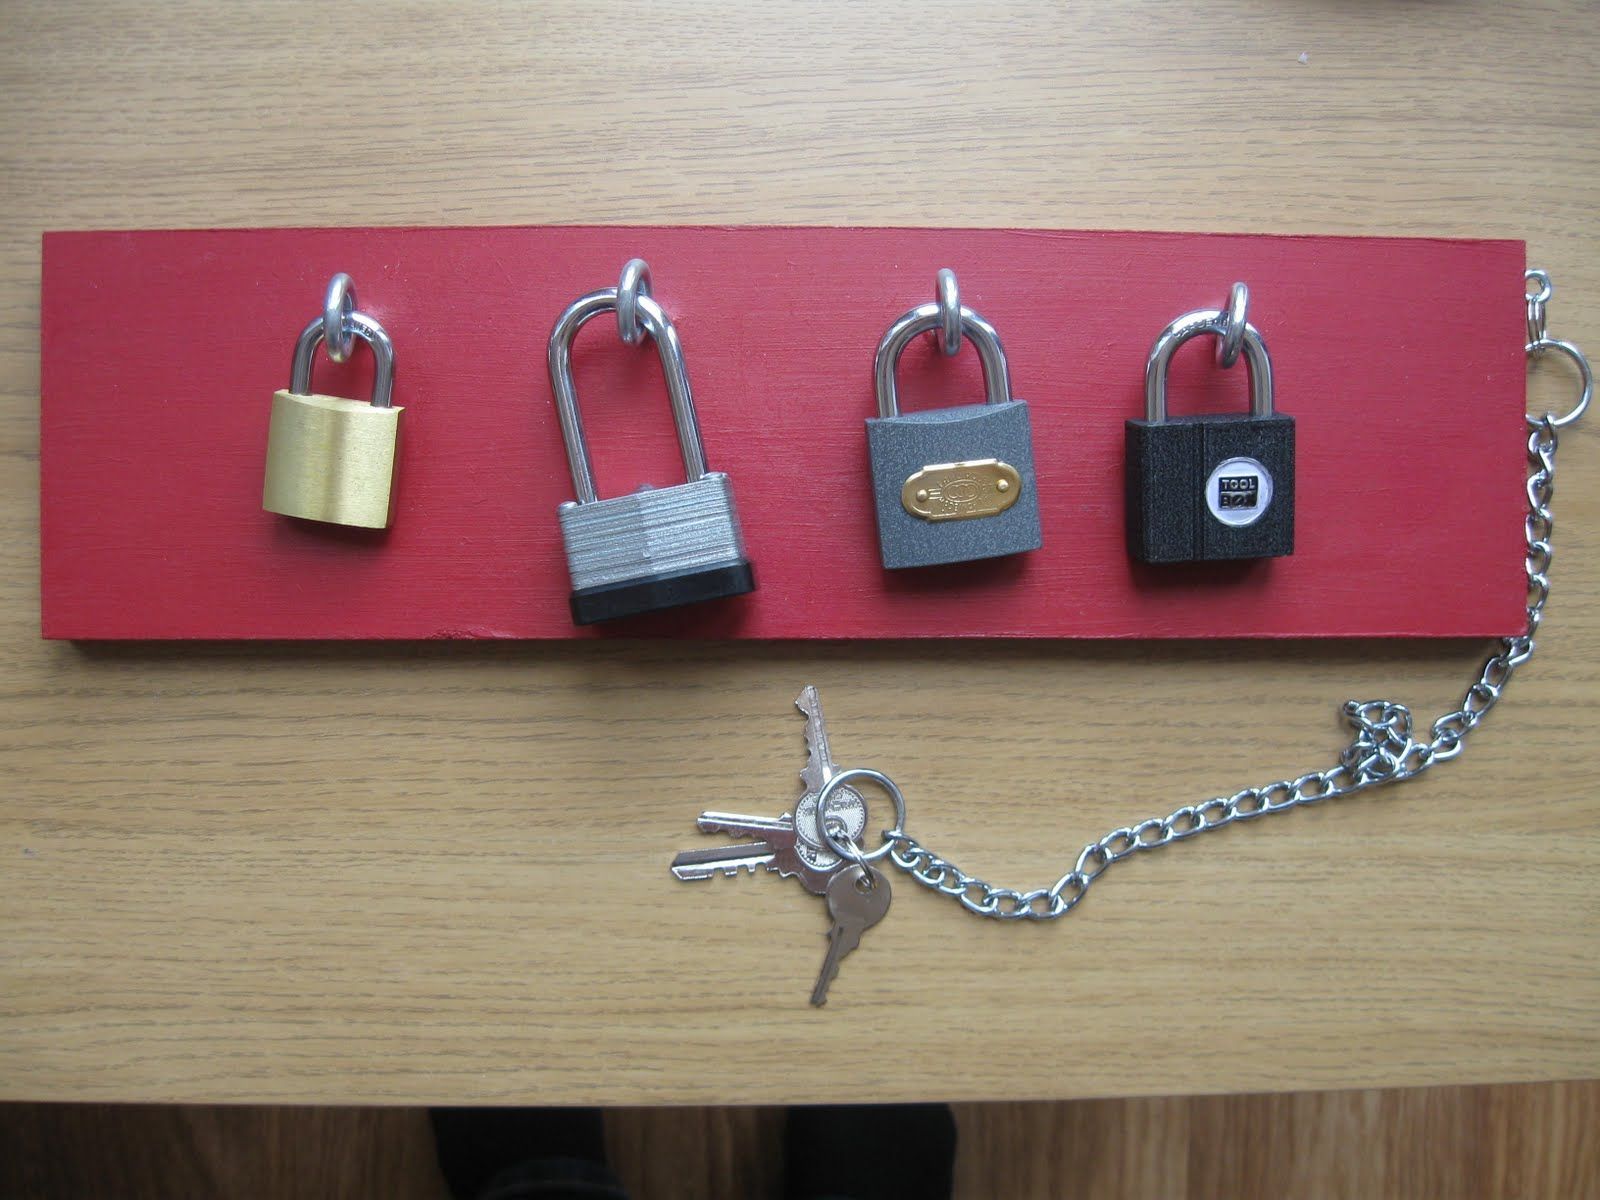 Montessori practical life activity – unlocking padlocks with keys